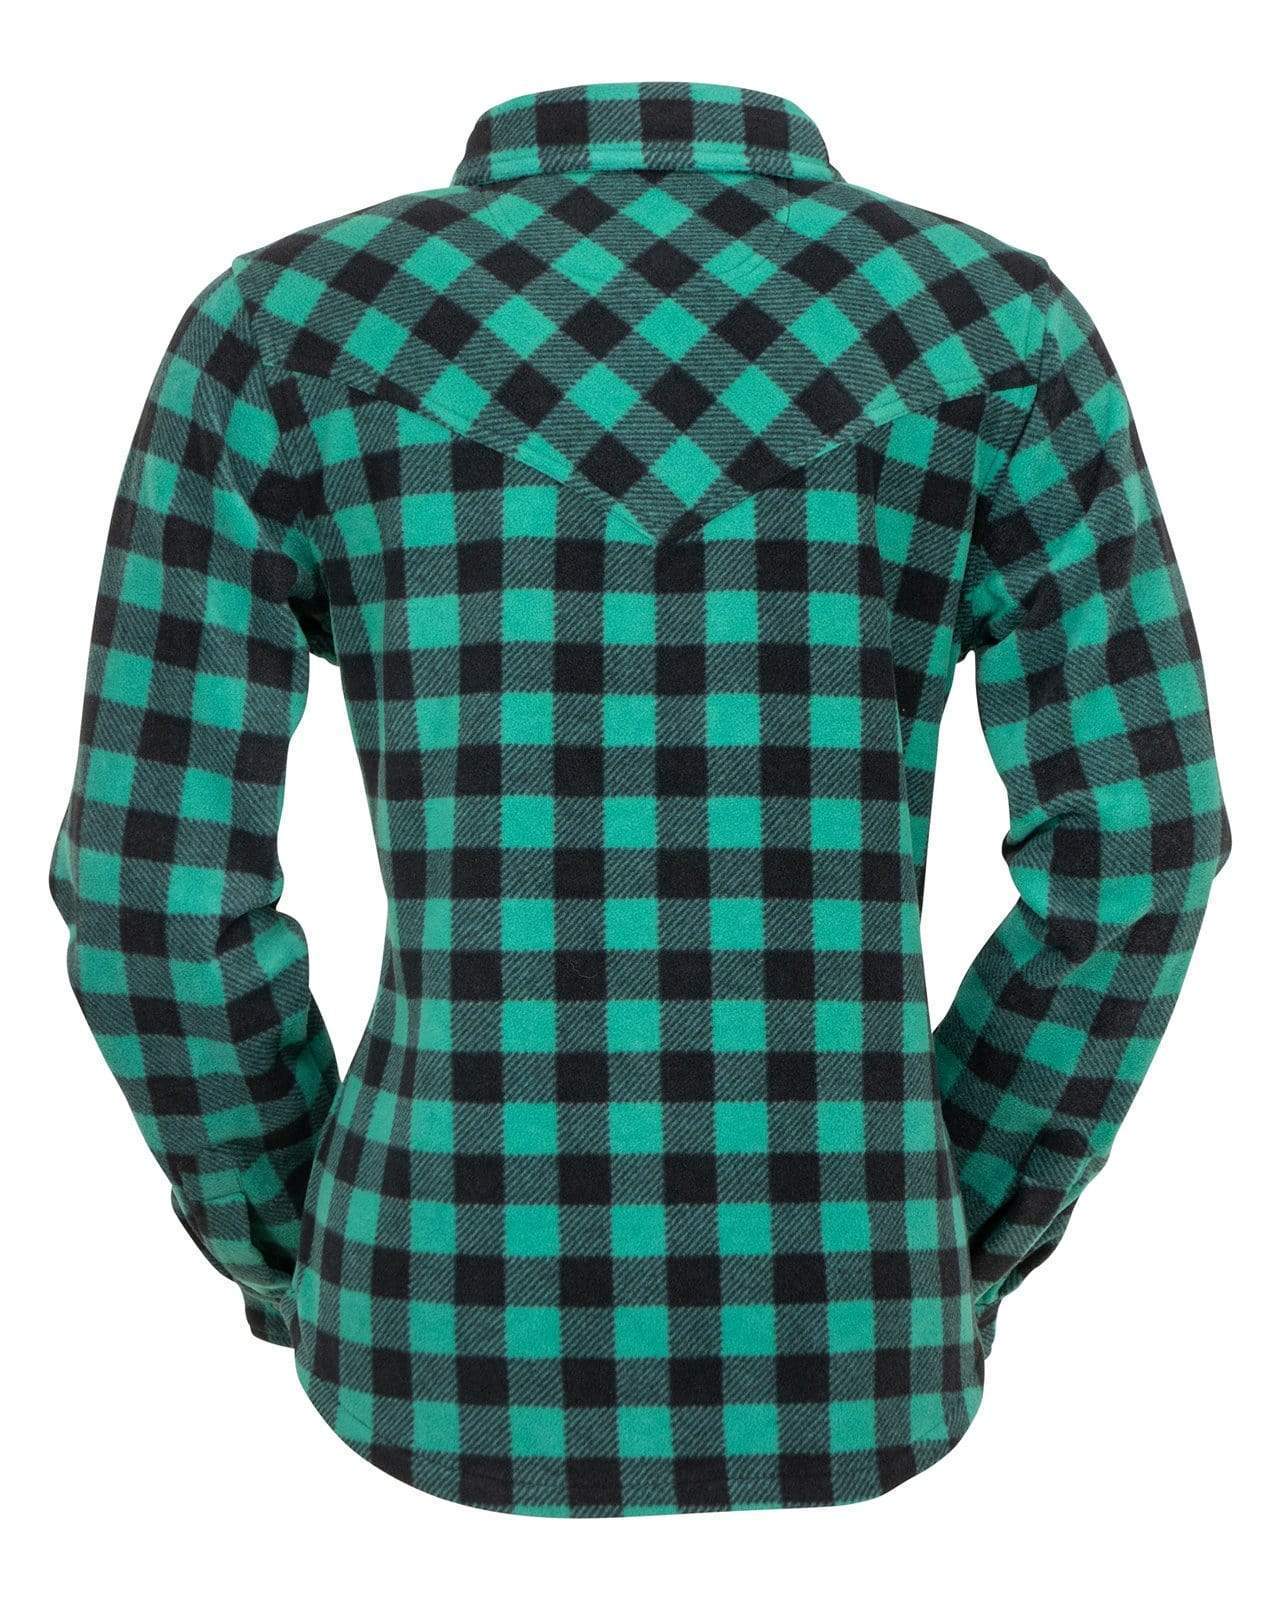 Outback Trading Company Ladies’ Fleece Big Shirt Shirts & Tops